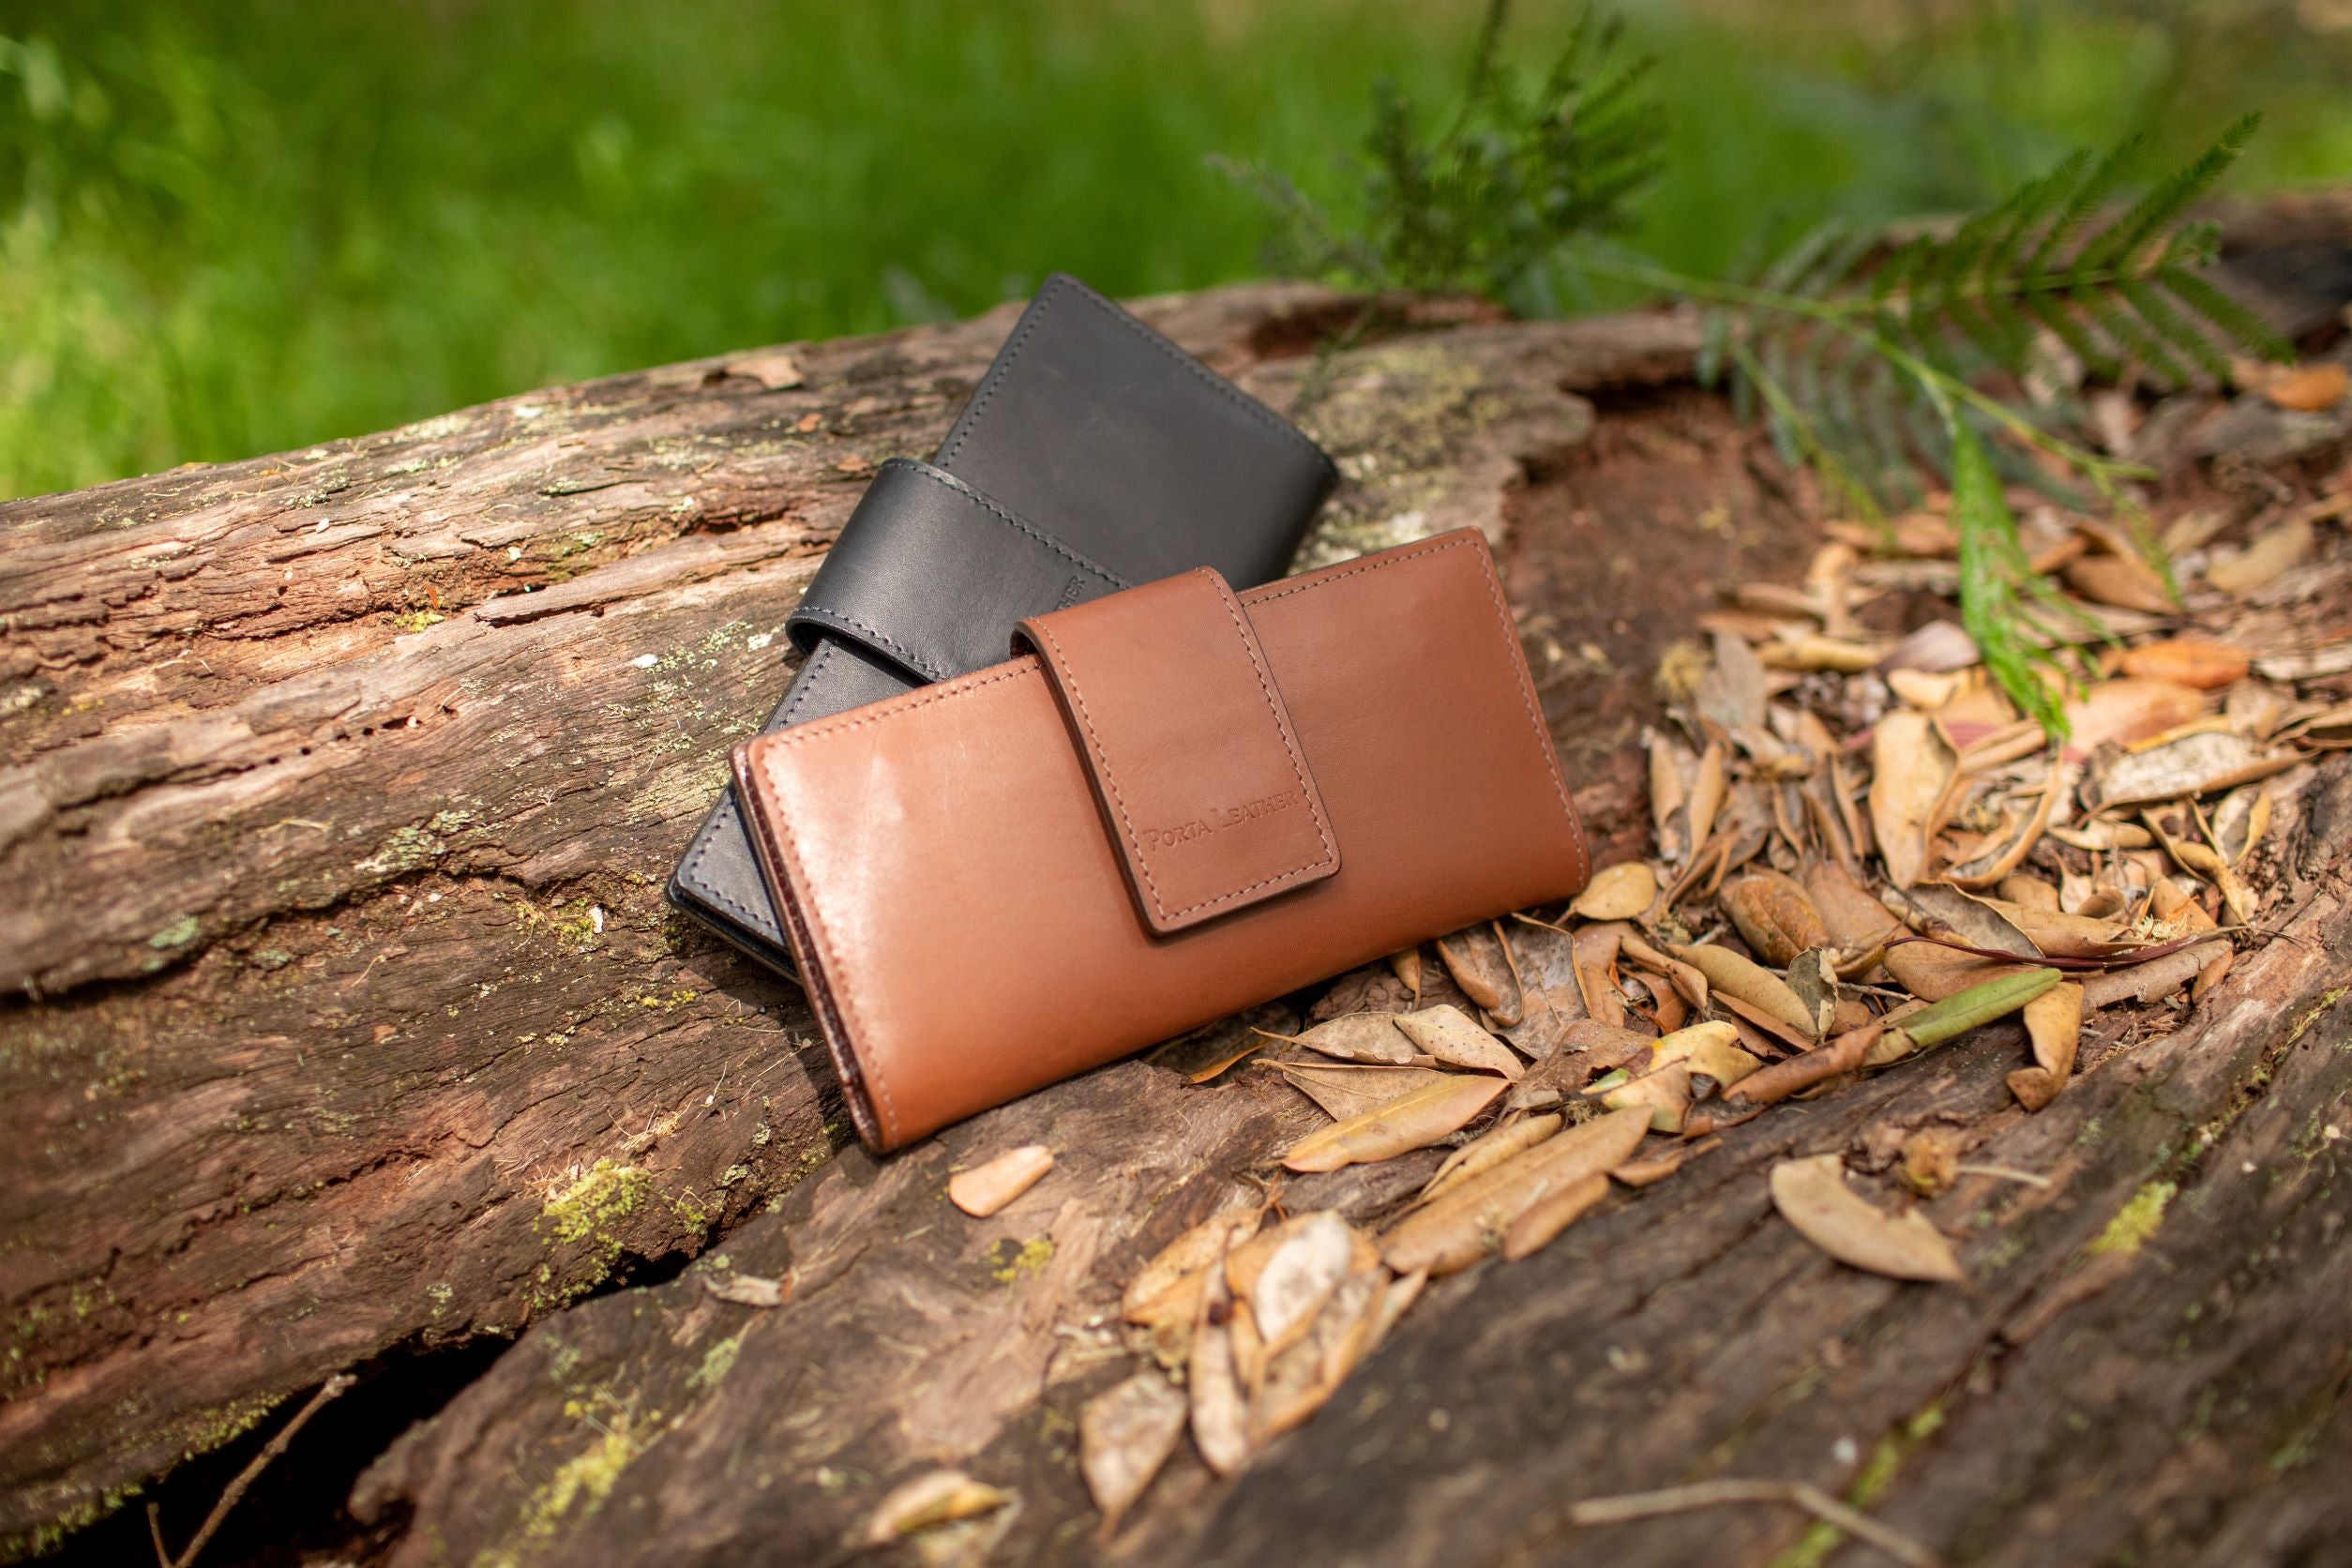 Porta Leather Long Wallets in Black and Brown in Australian bush setting